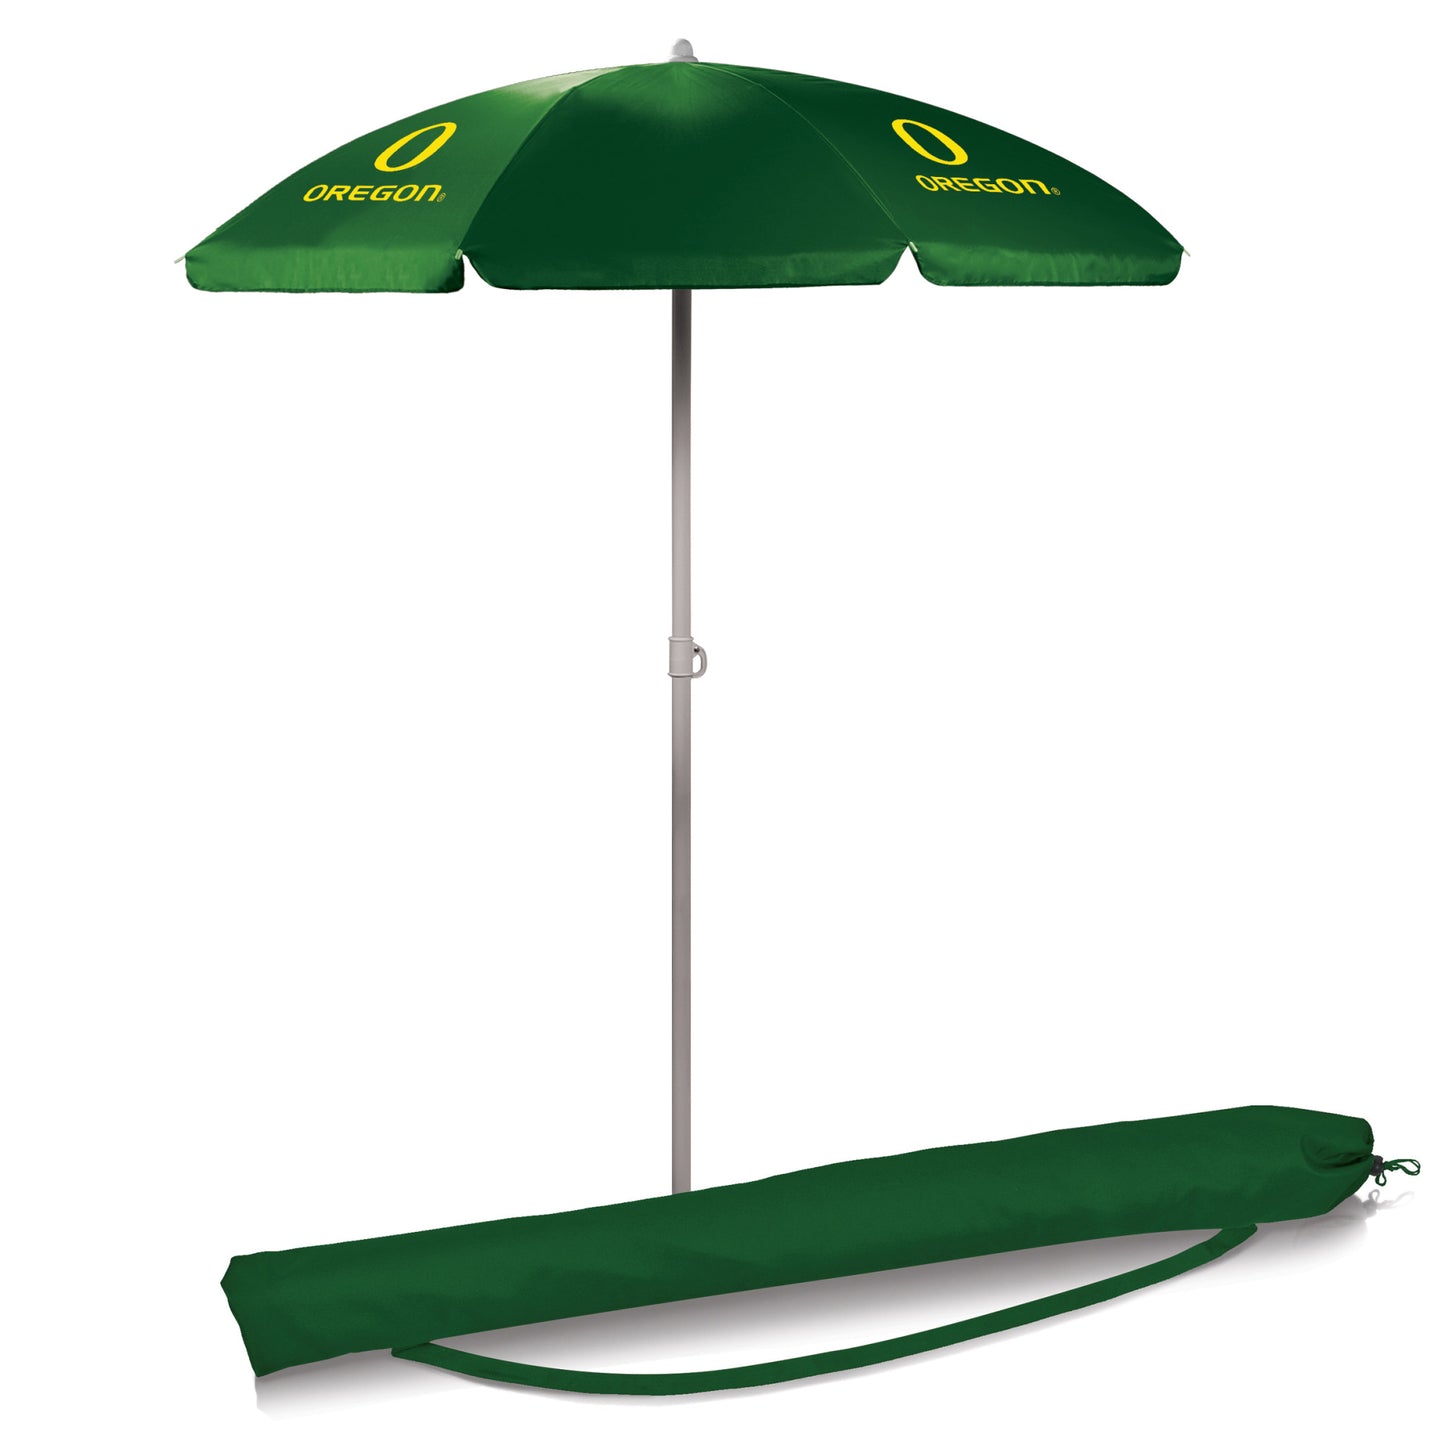 Oregon Ducks 5.5' Portable Beach Umbrella by Picnic Time